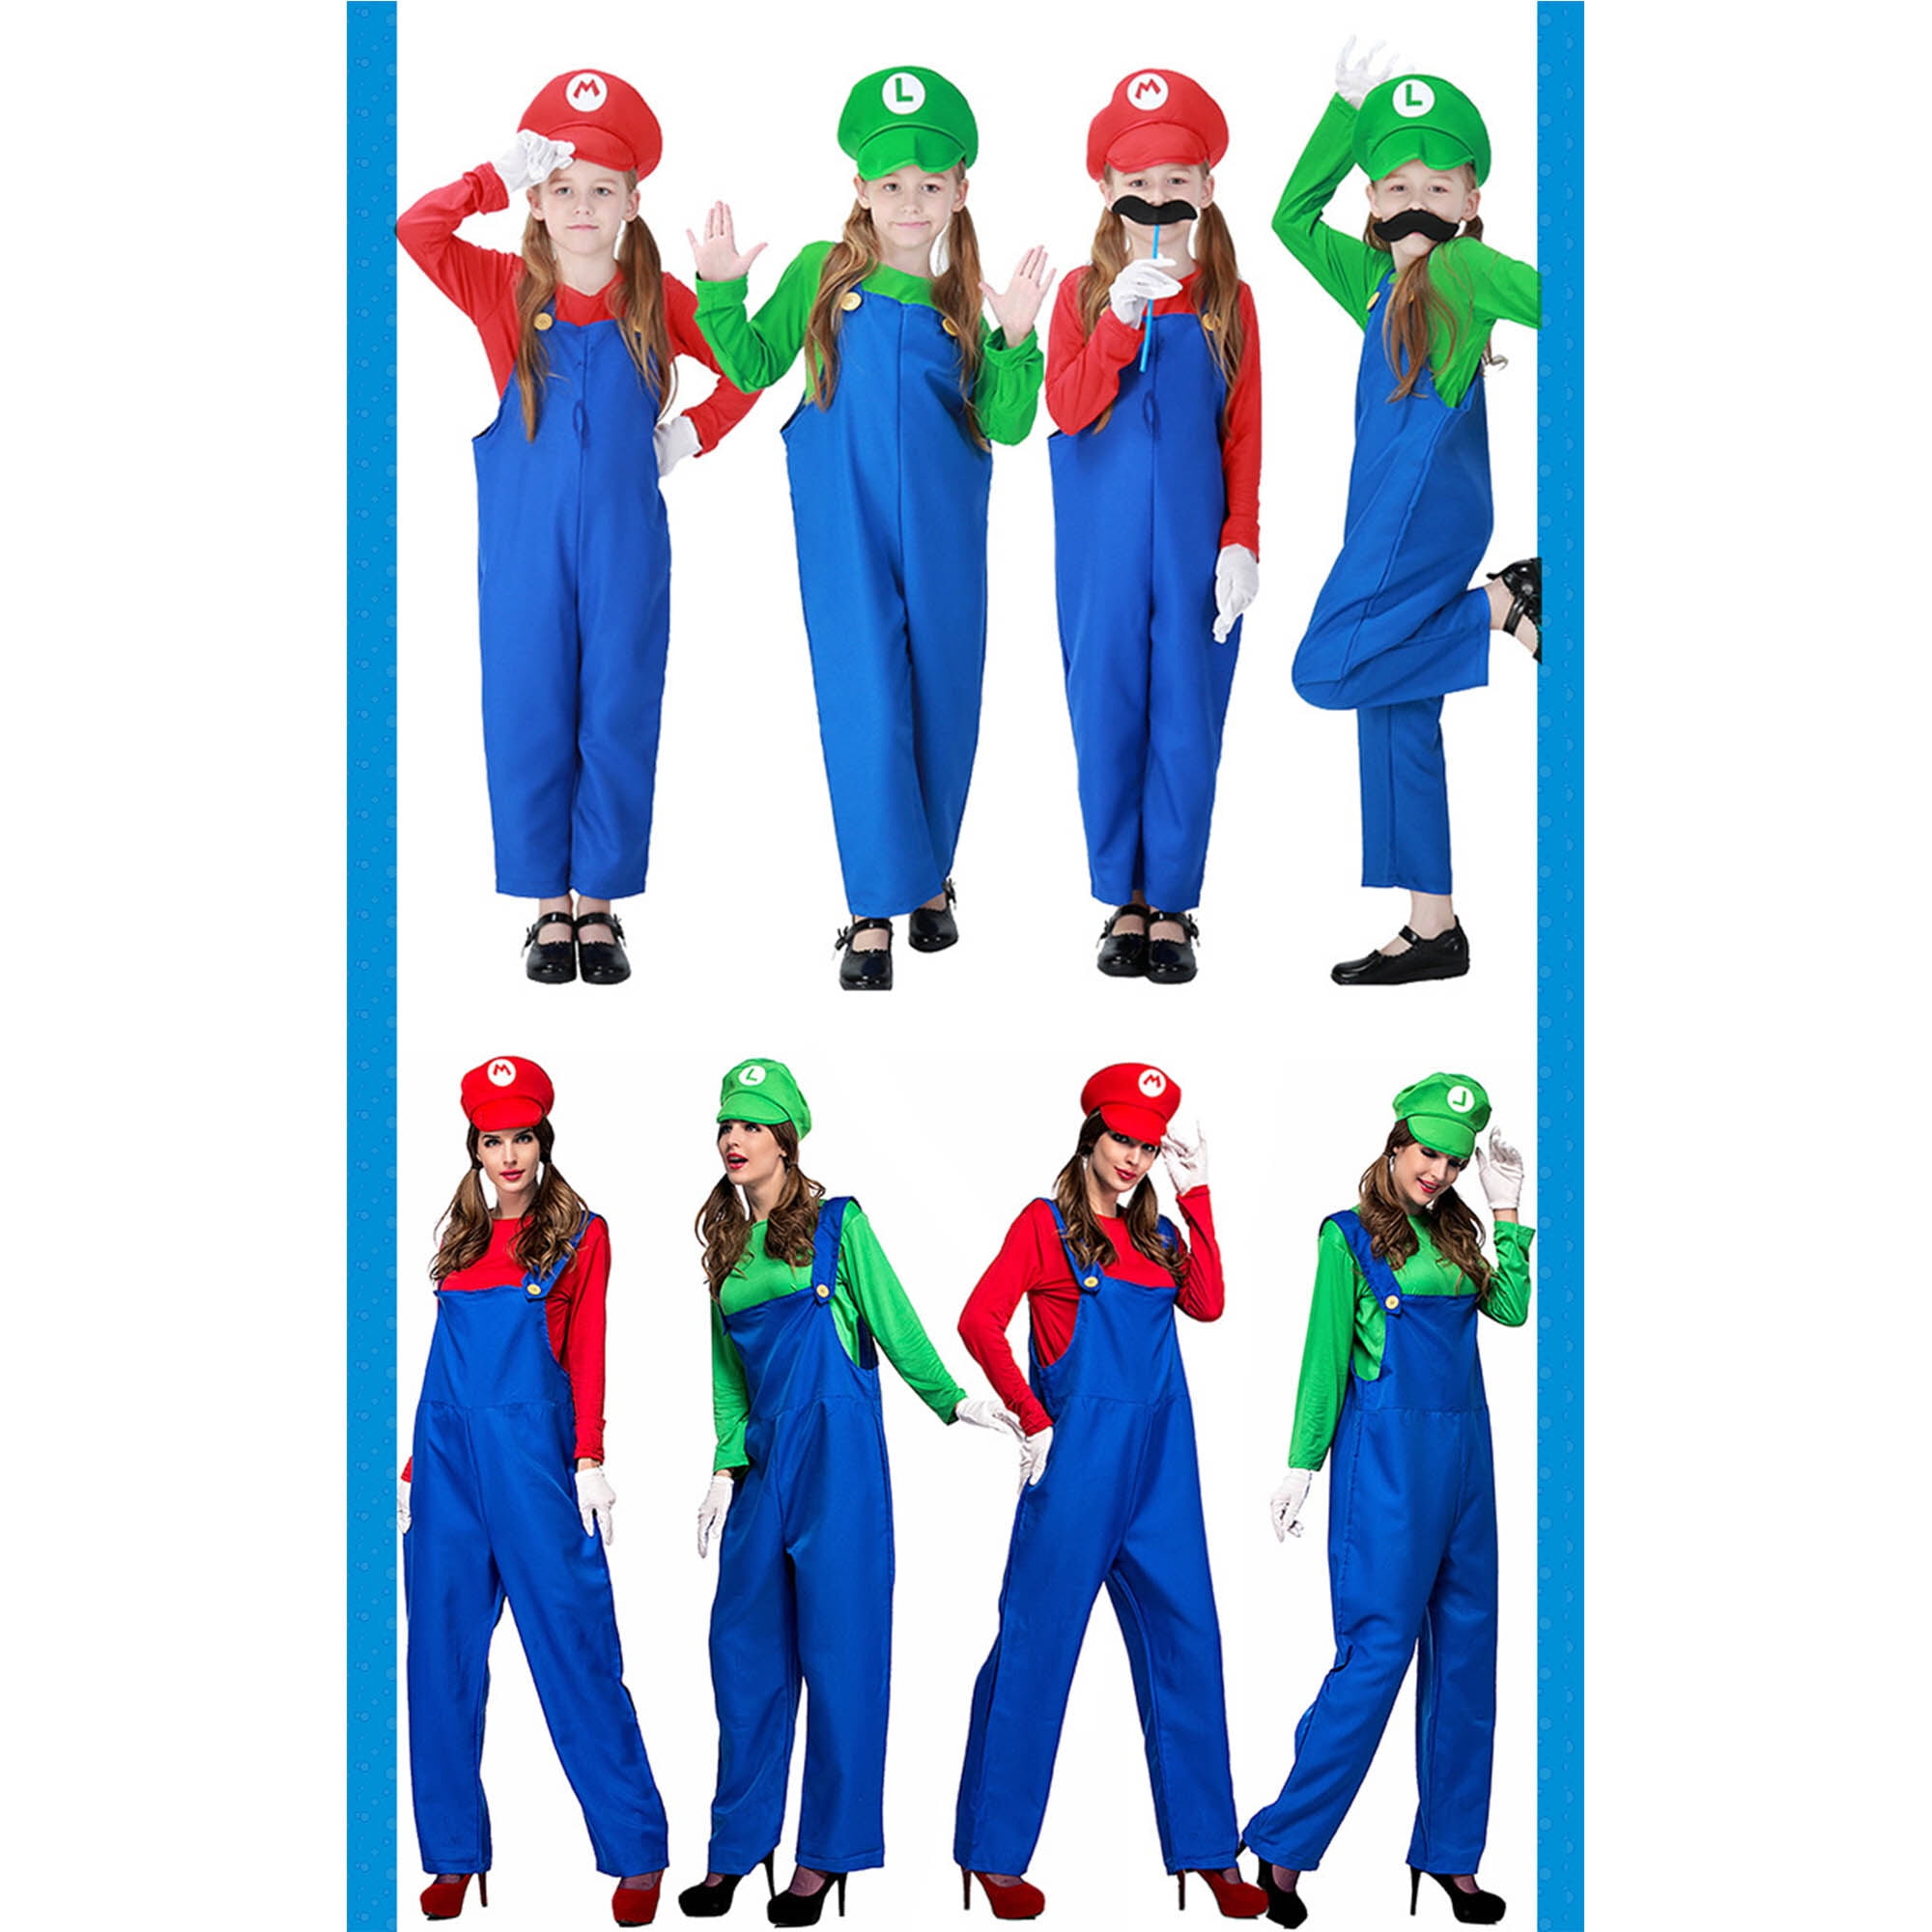 Buy Super Mario Brothers Halloween Costume Kit - Cappel's